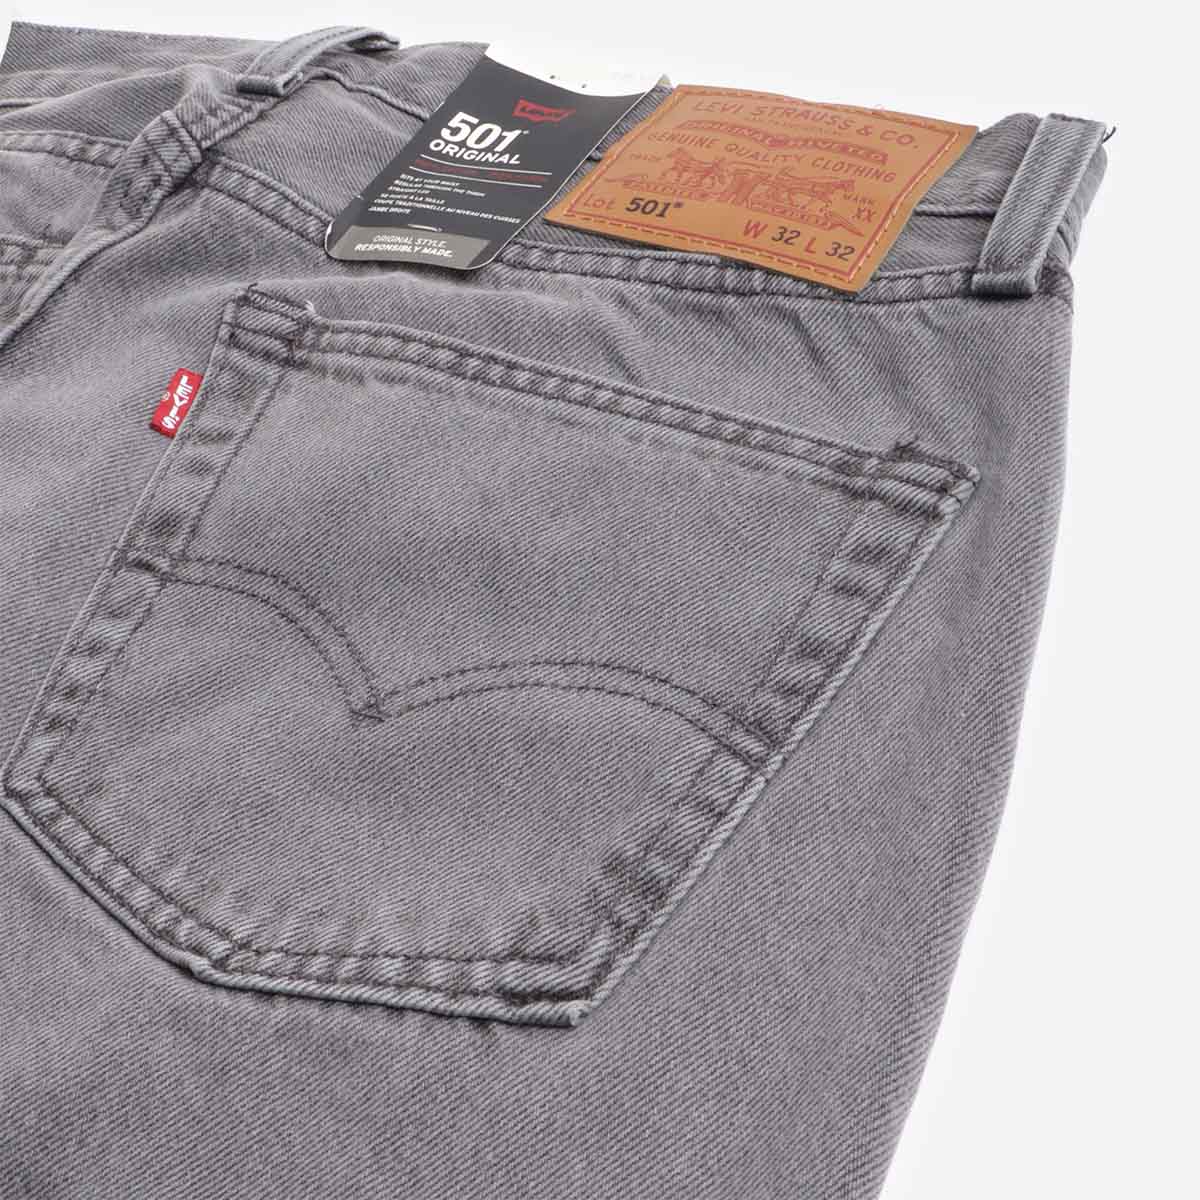 Levis 501 Original Fit Jeans, Walk Down Broadway, Detail Shot 4